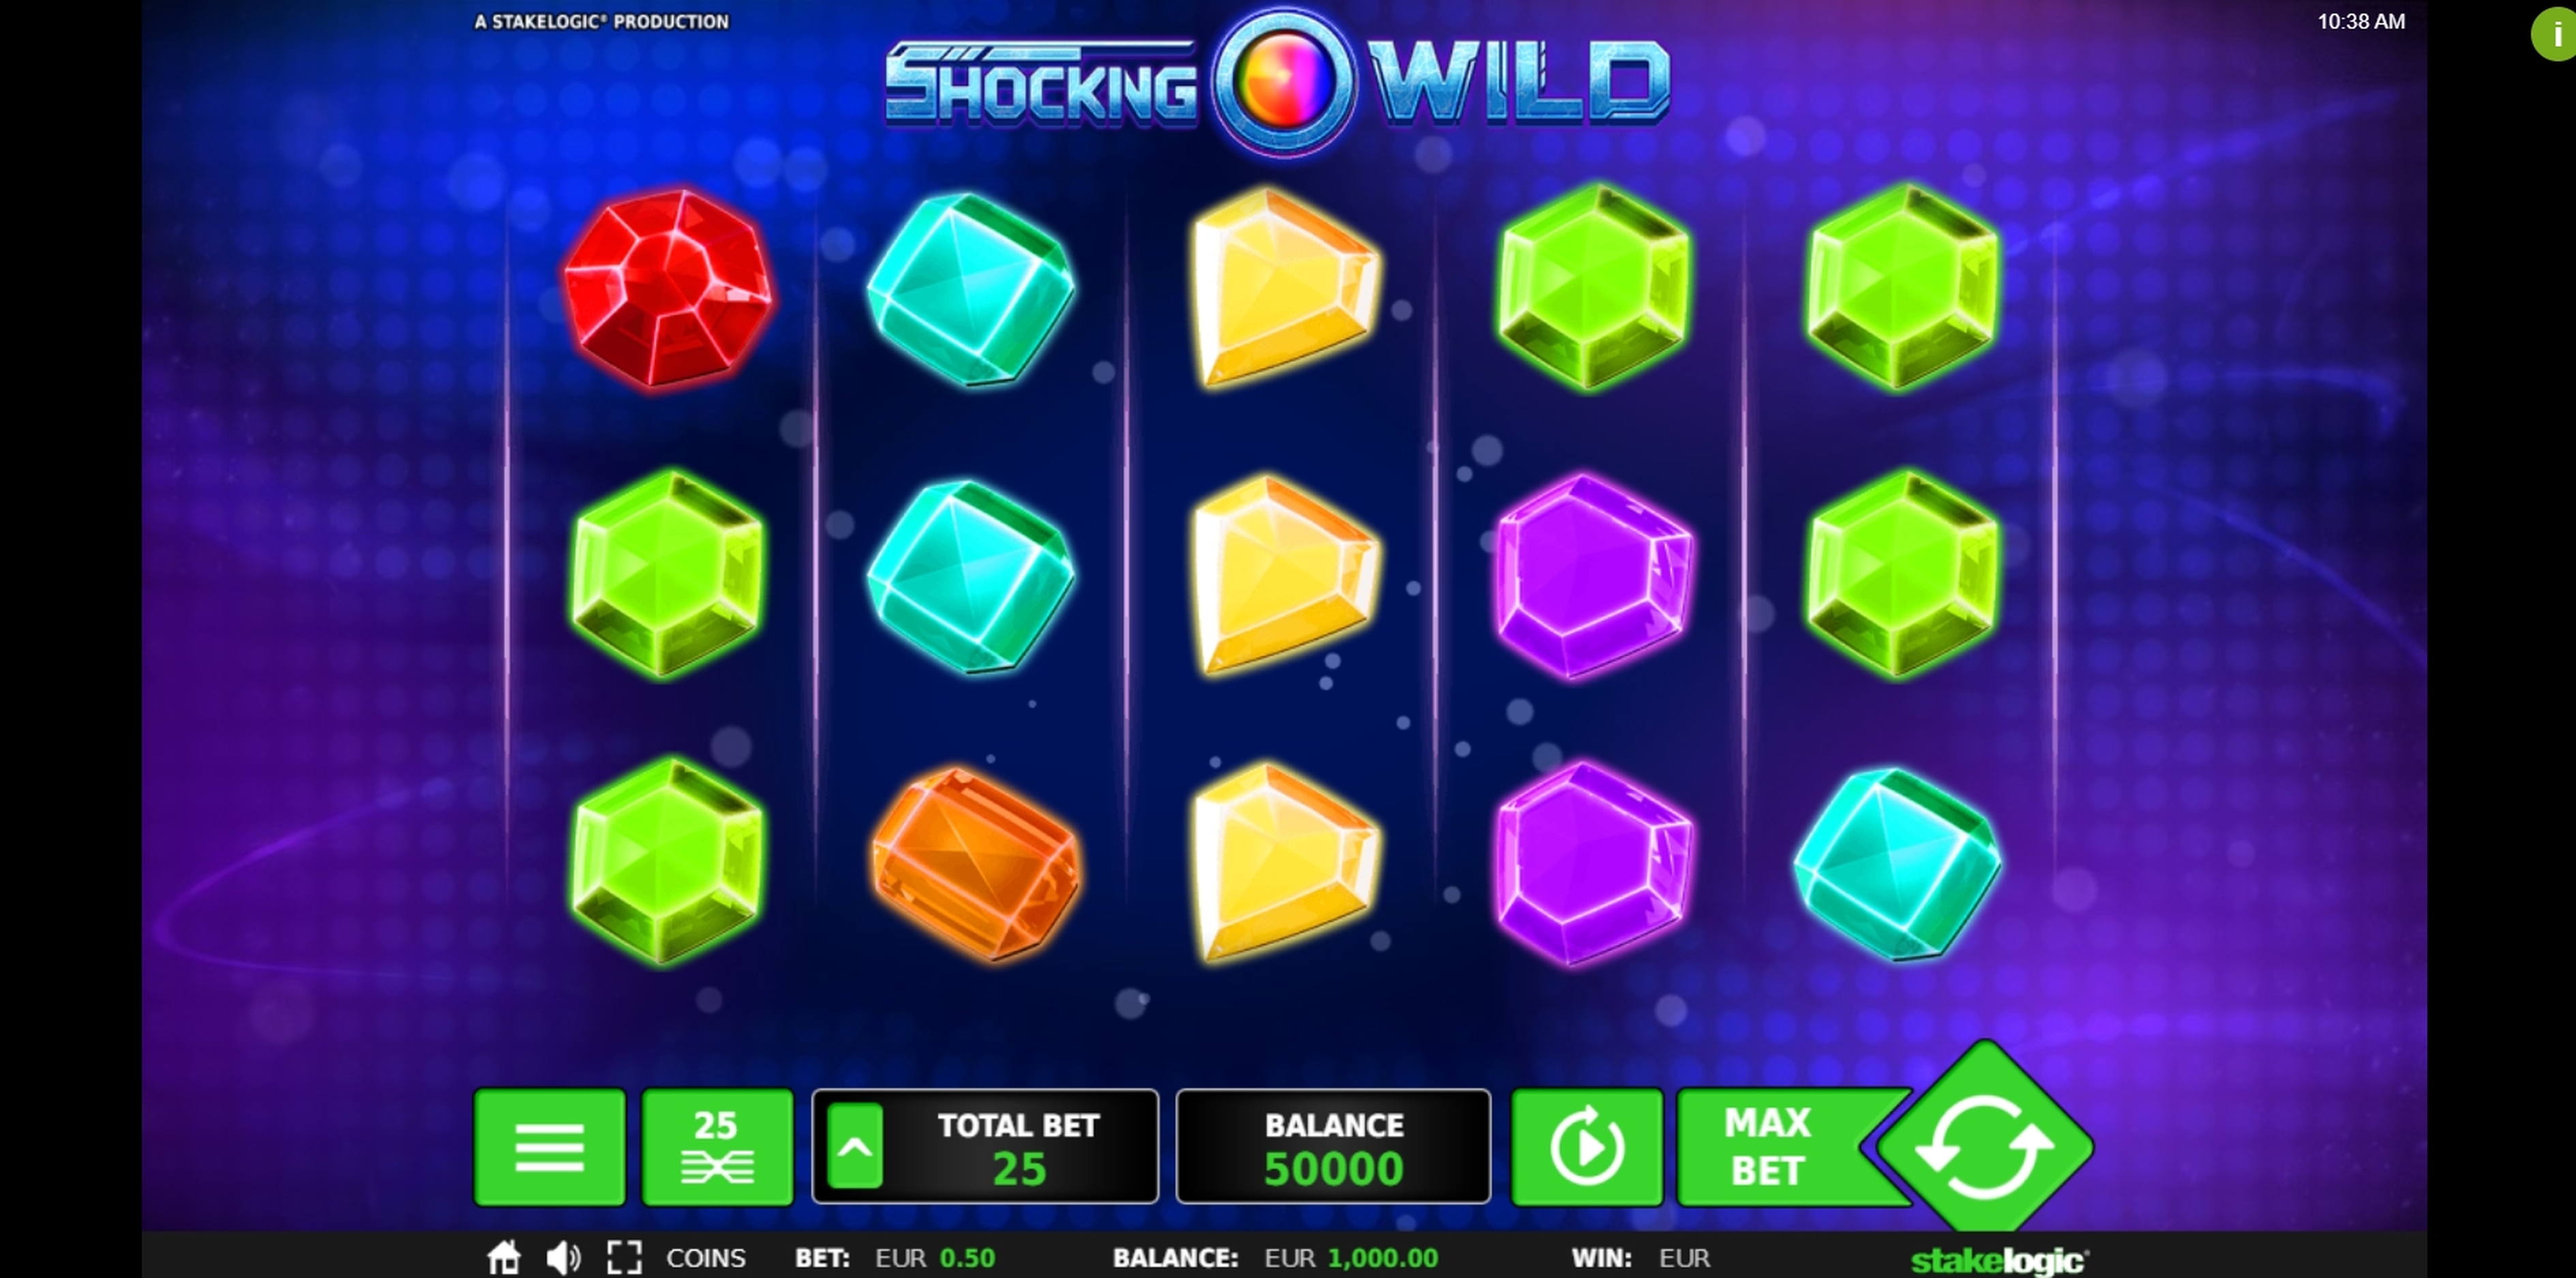 Reels in Shocking Wild Slot Game by Stakelogic